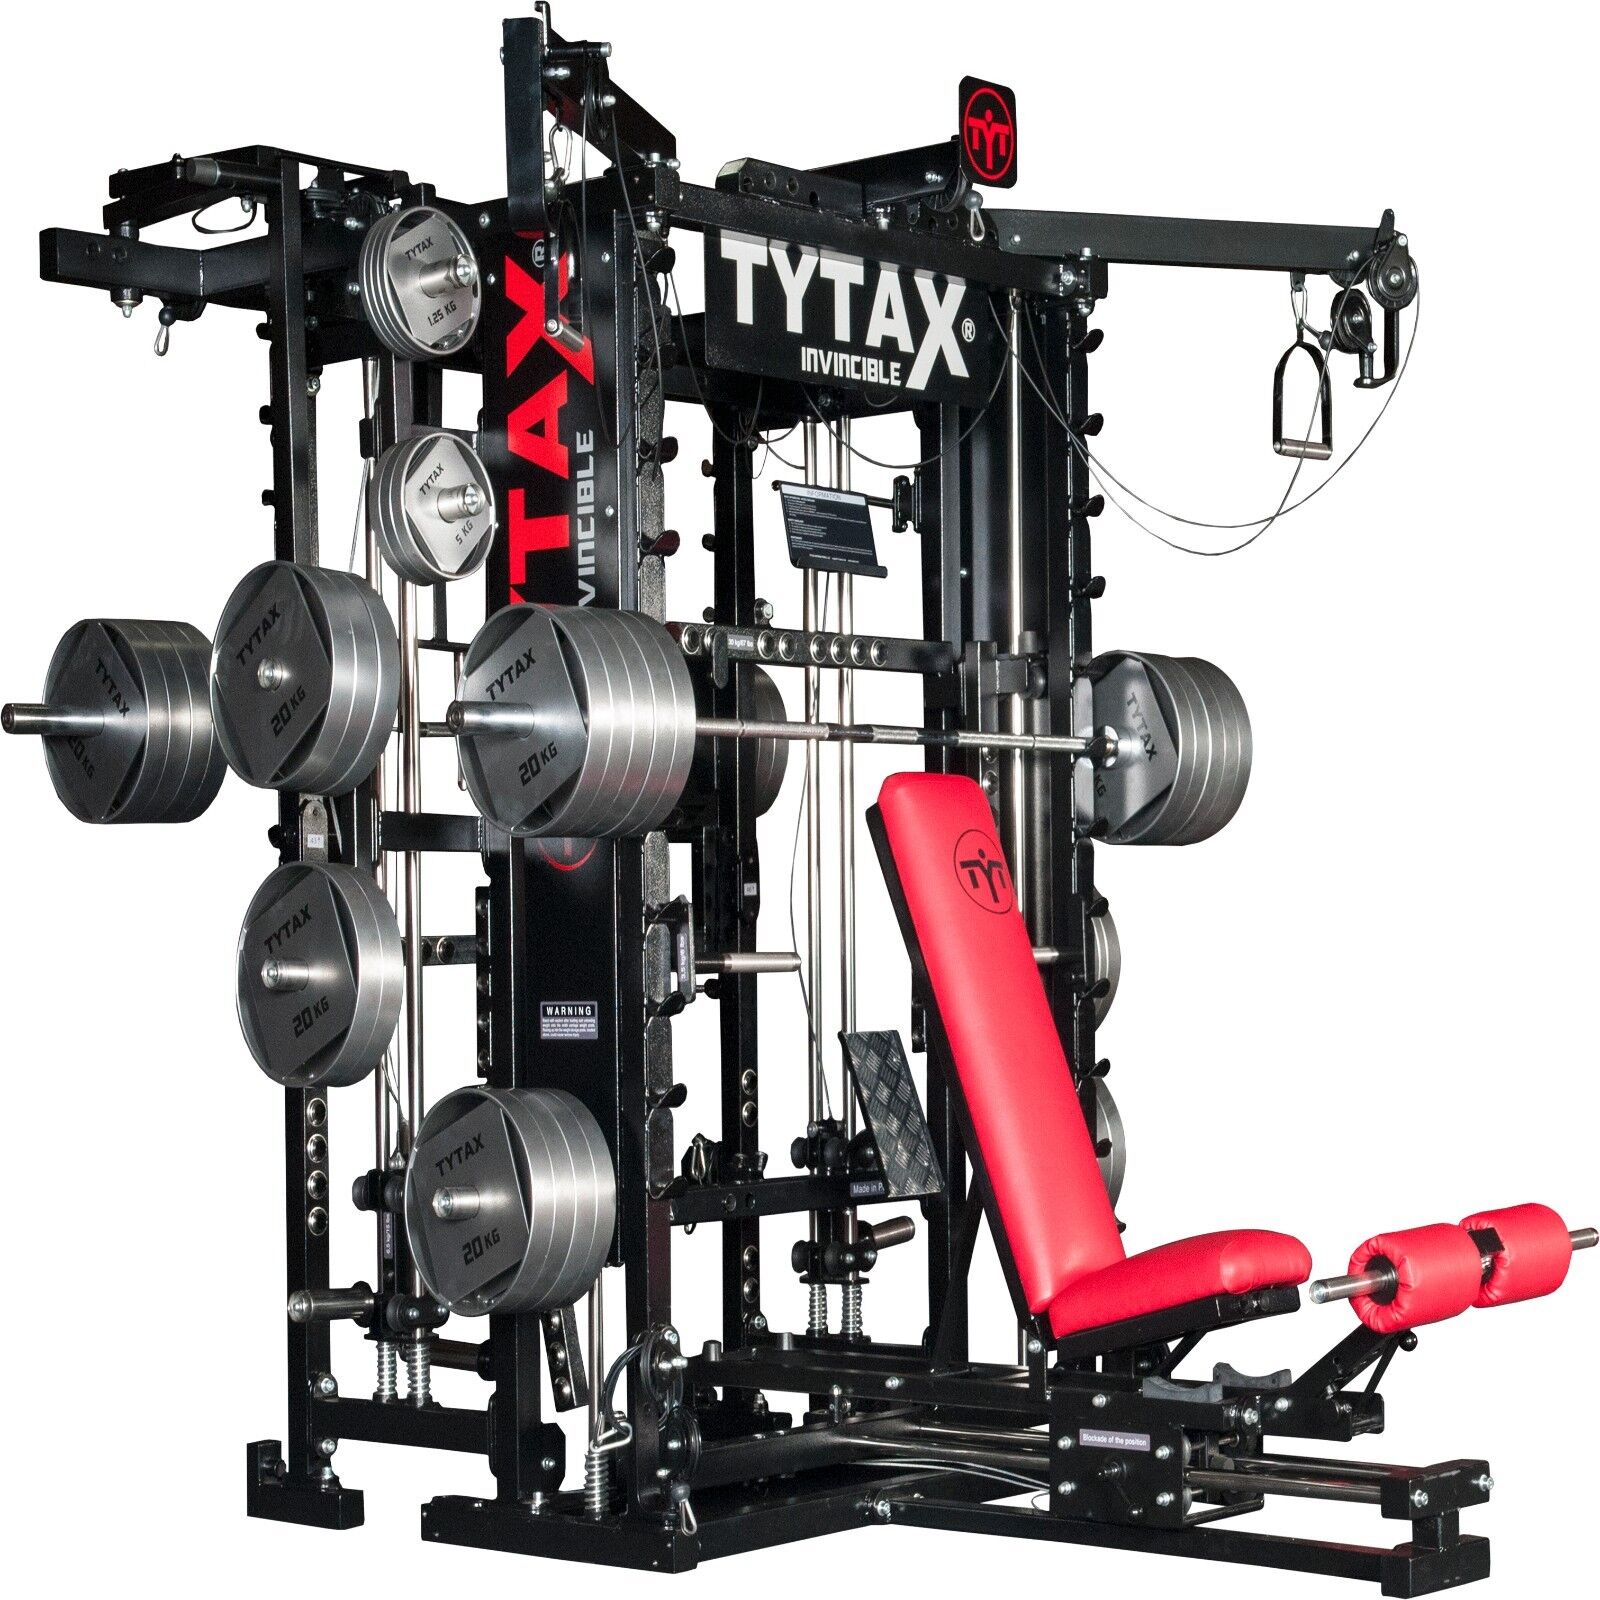 Tytax T1 X Gym